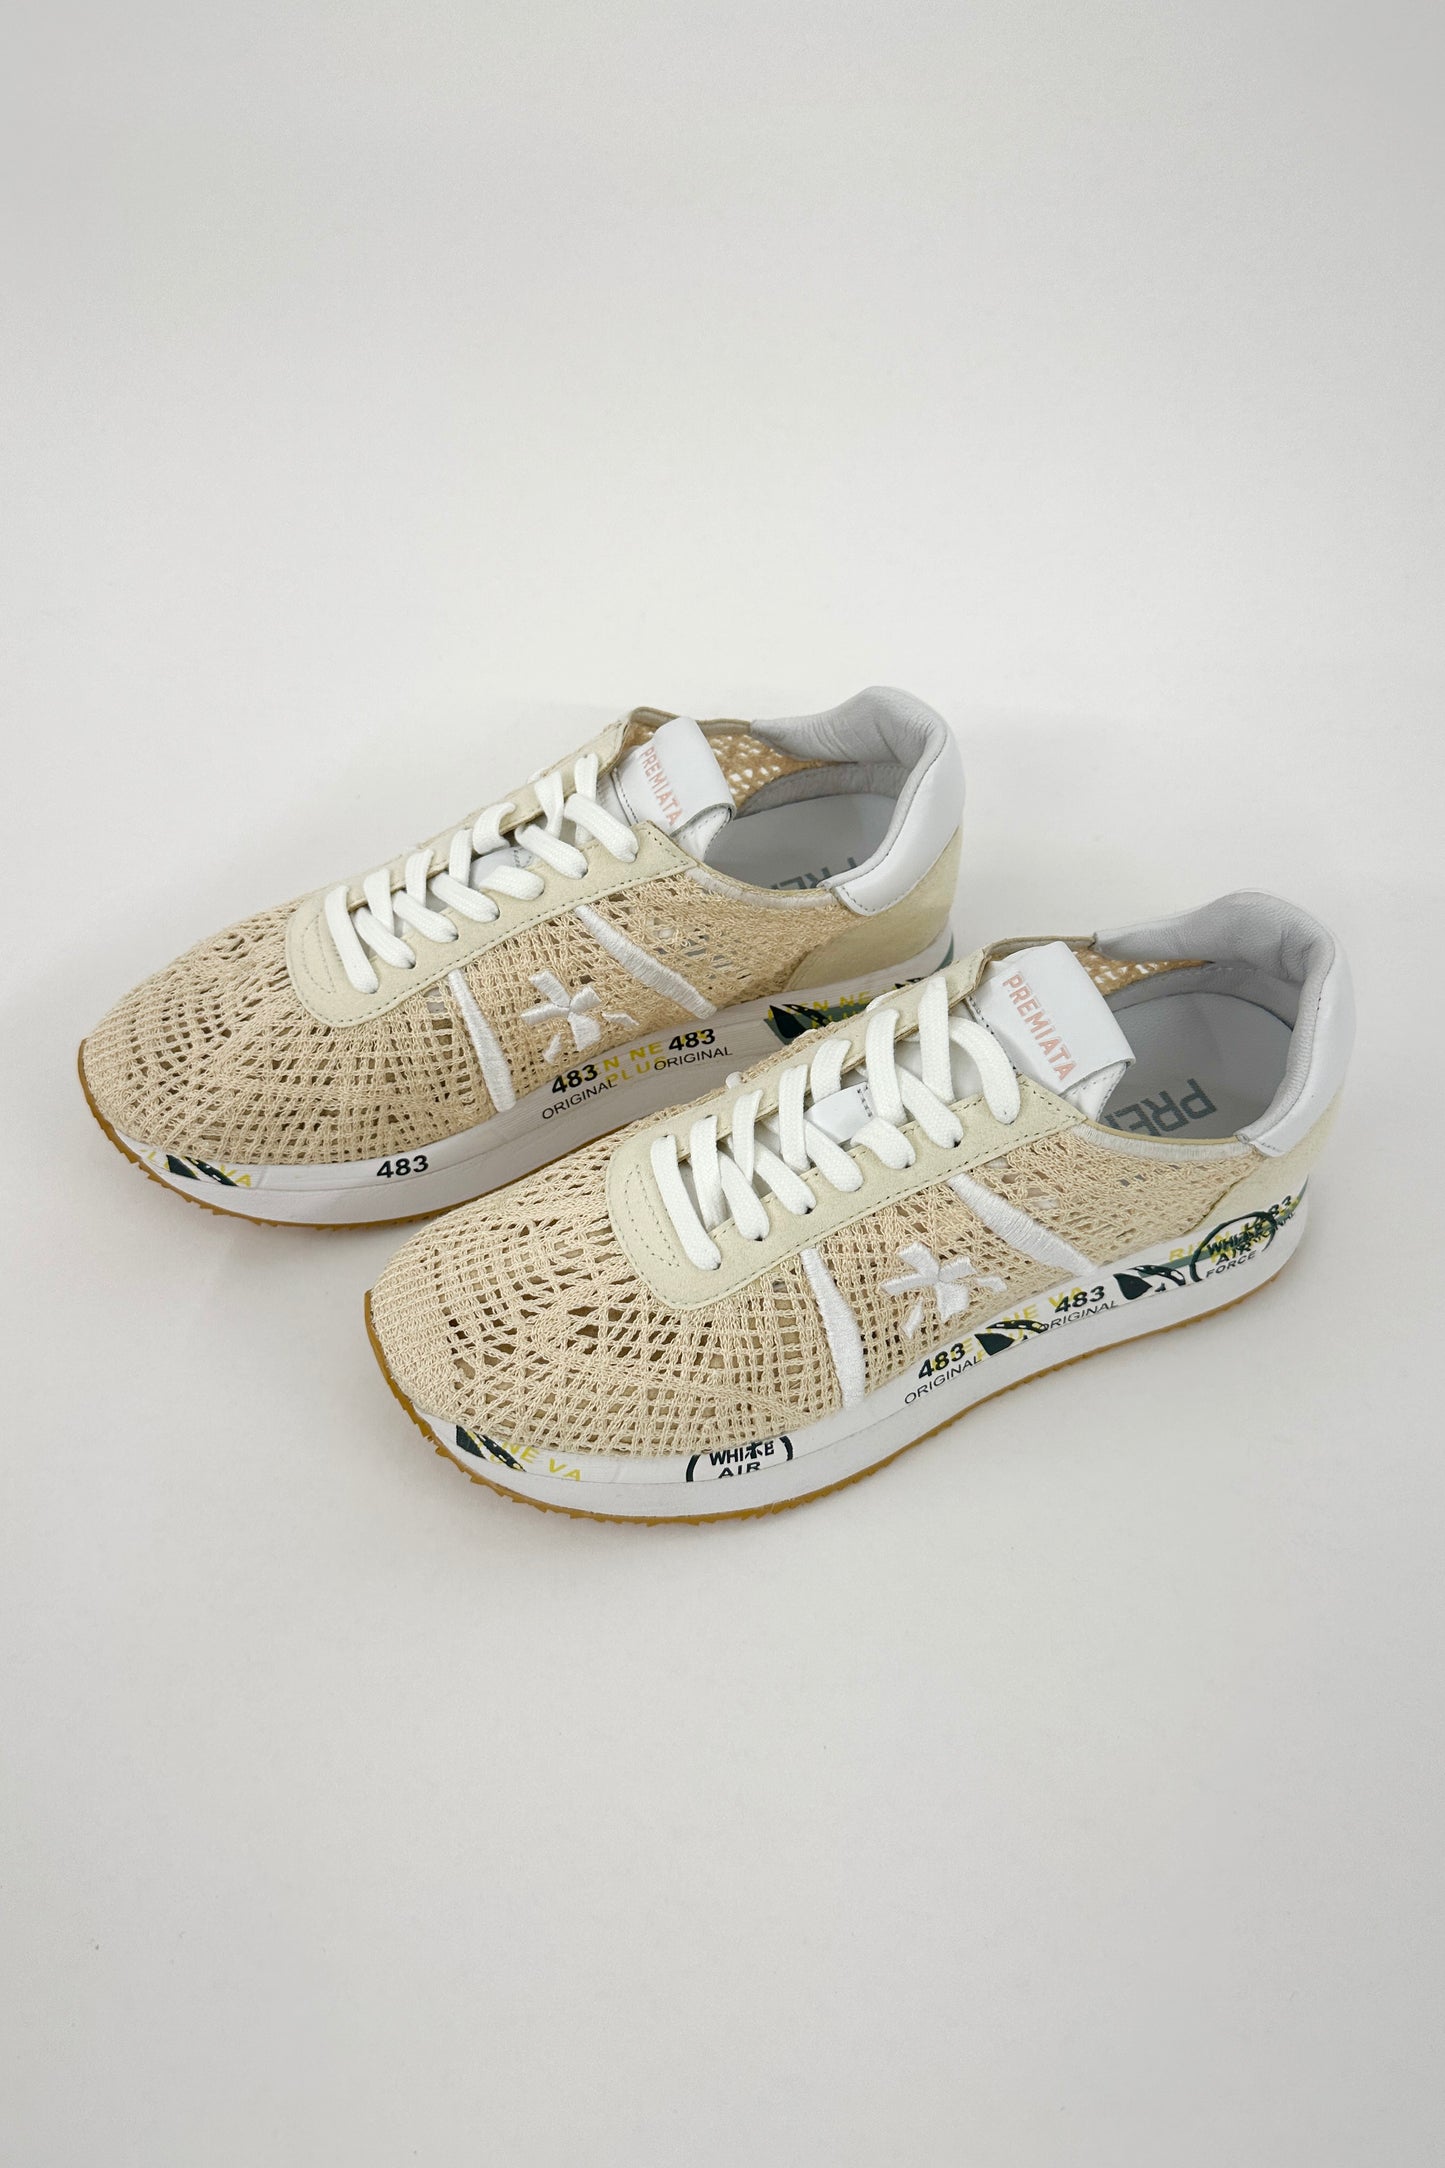 Premiata - Conny 6348 Sneaker: Tan